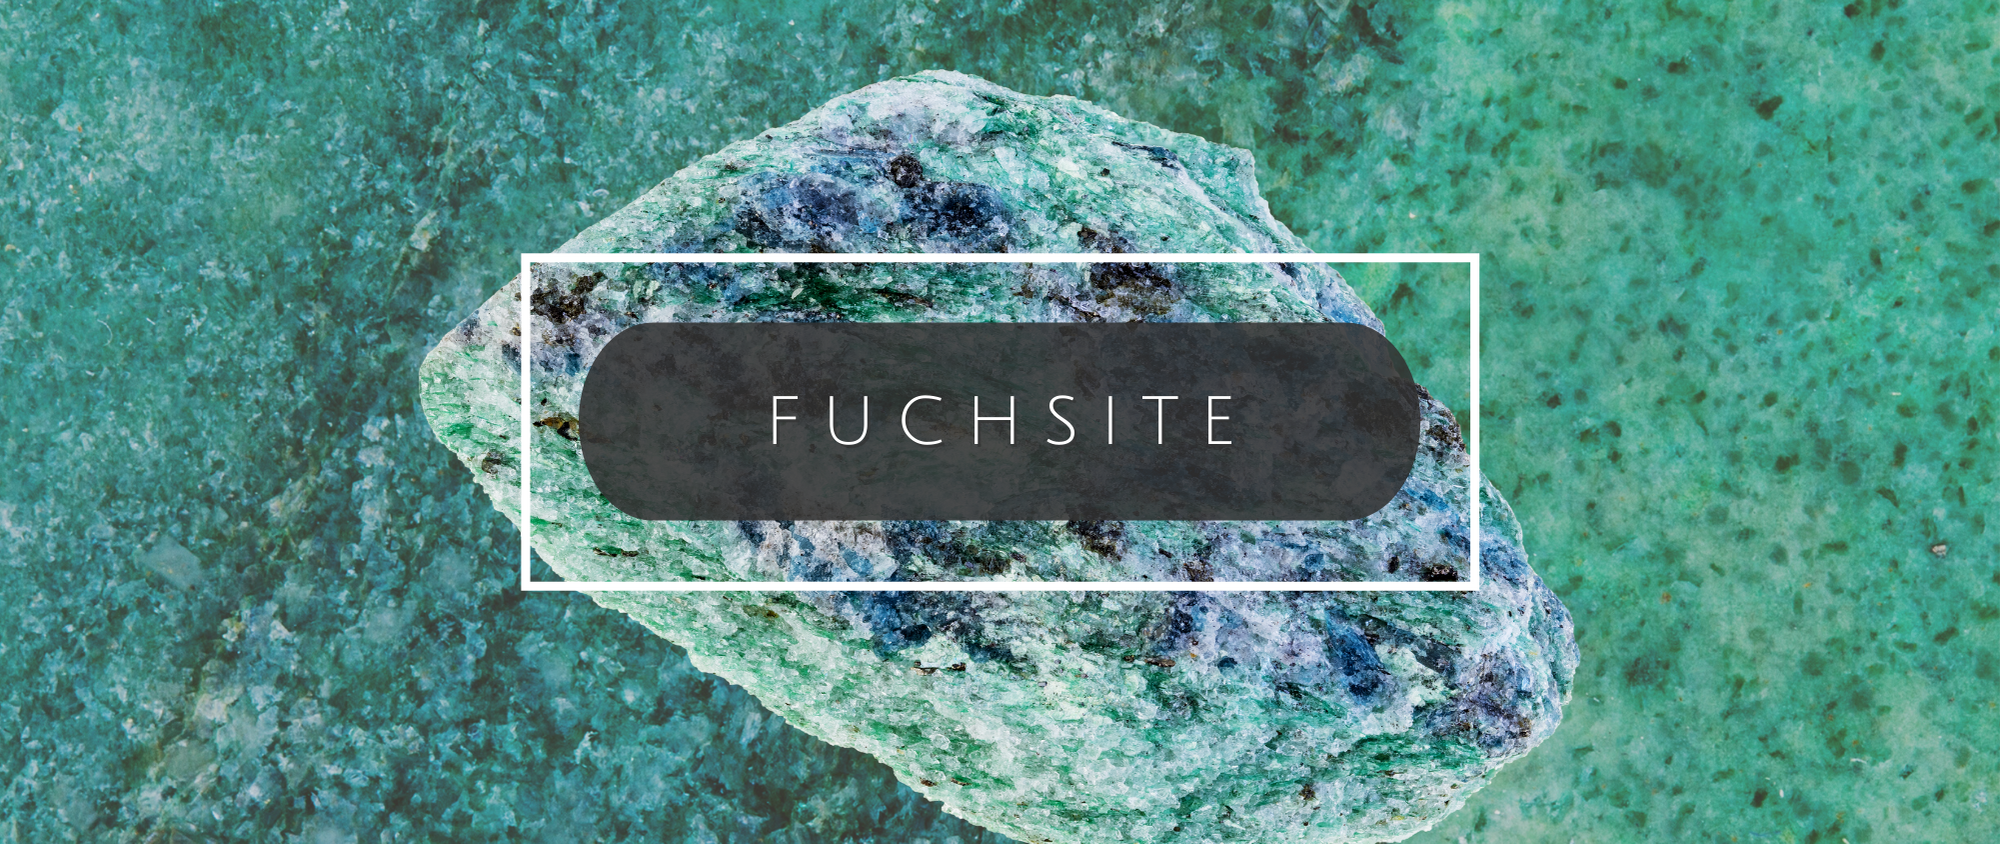 Fuchsite Gemstone: Properties, Meanings, Value & More